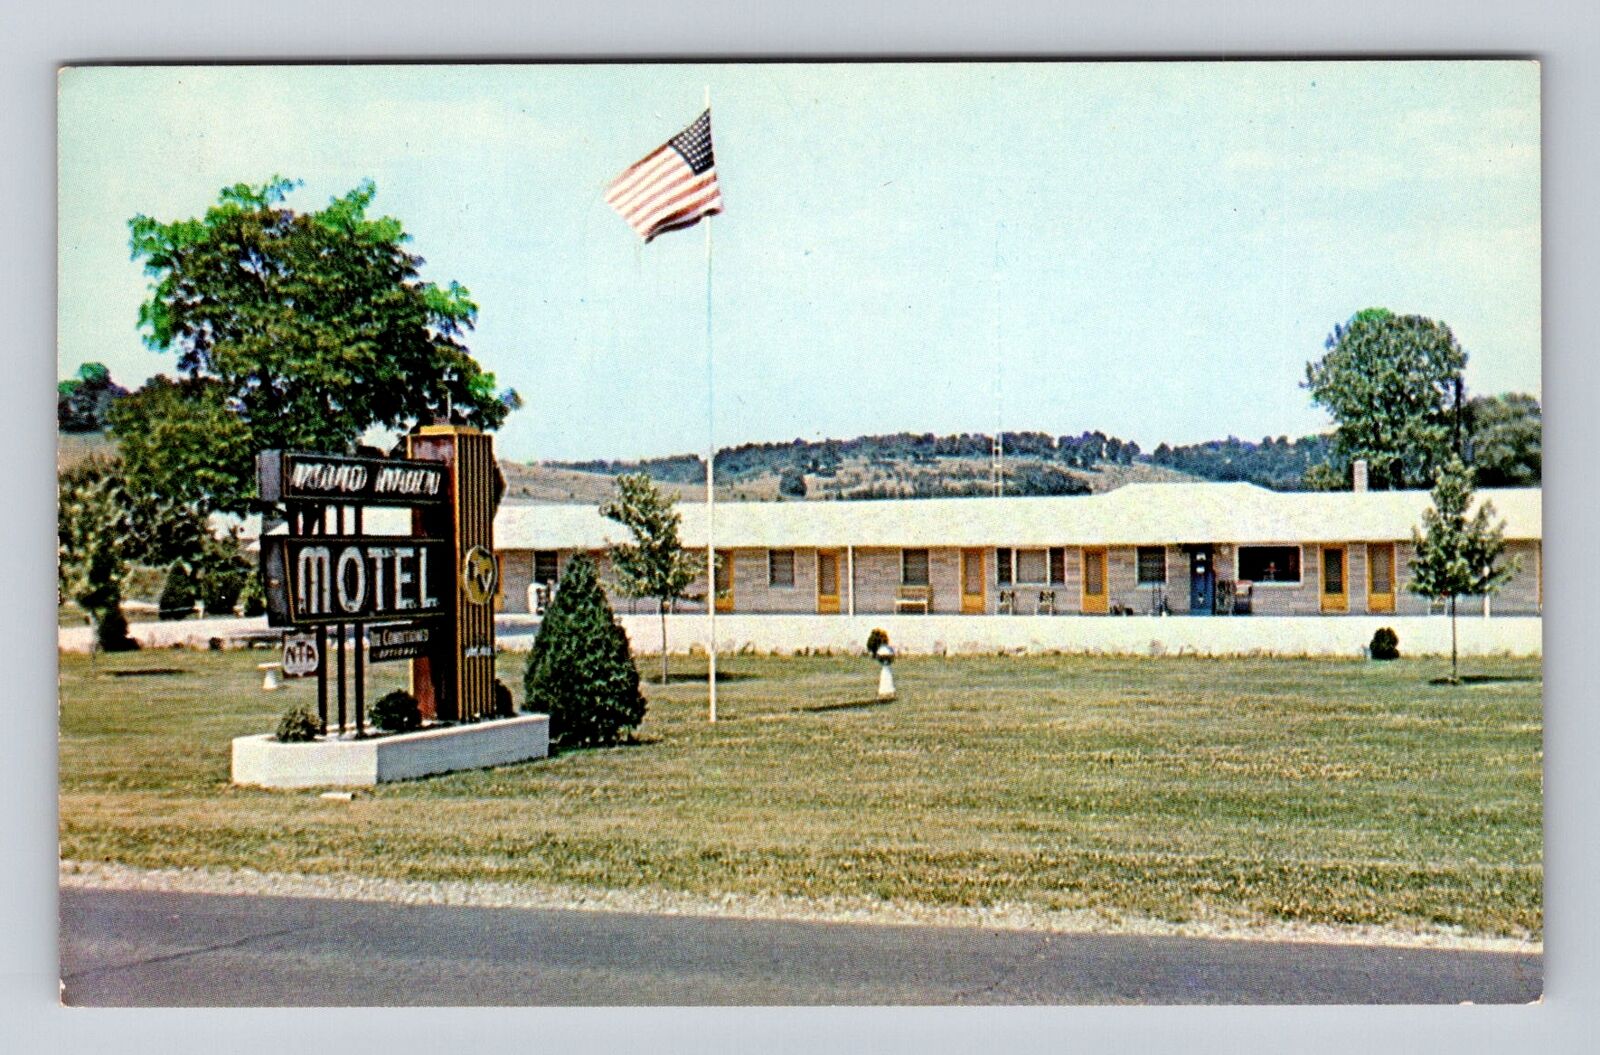 Brookville IN-Indiana, Mound Haven Motel Advertising Vintage Souvenir Postcard